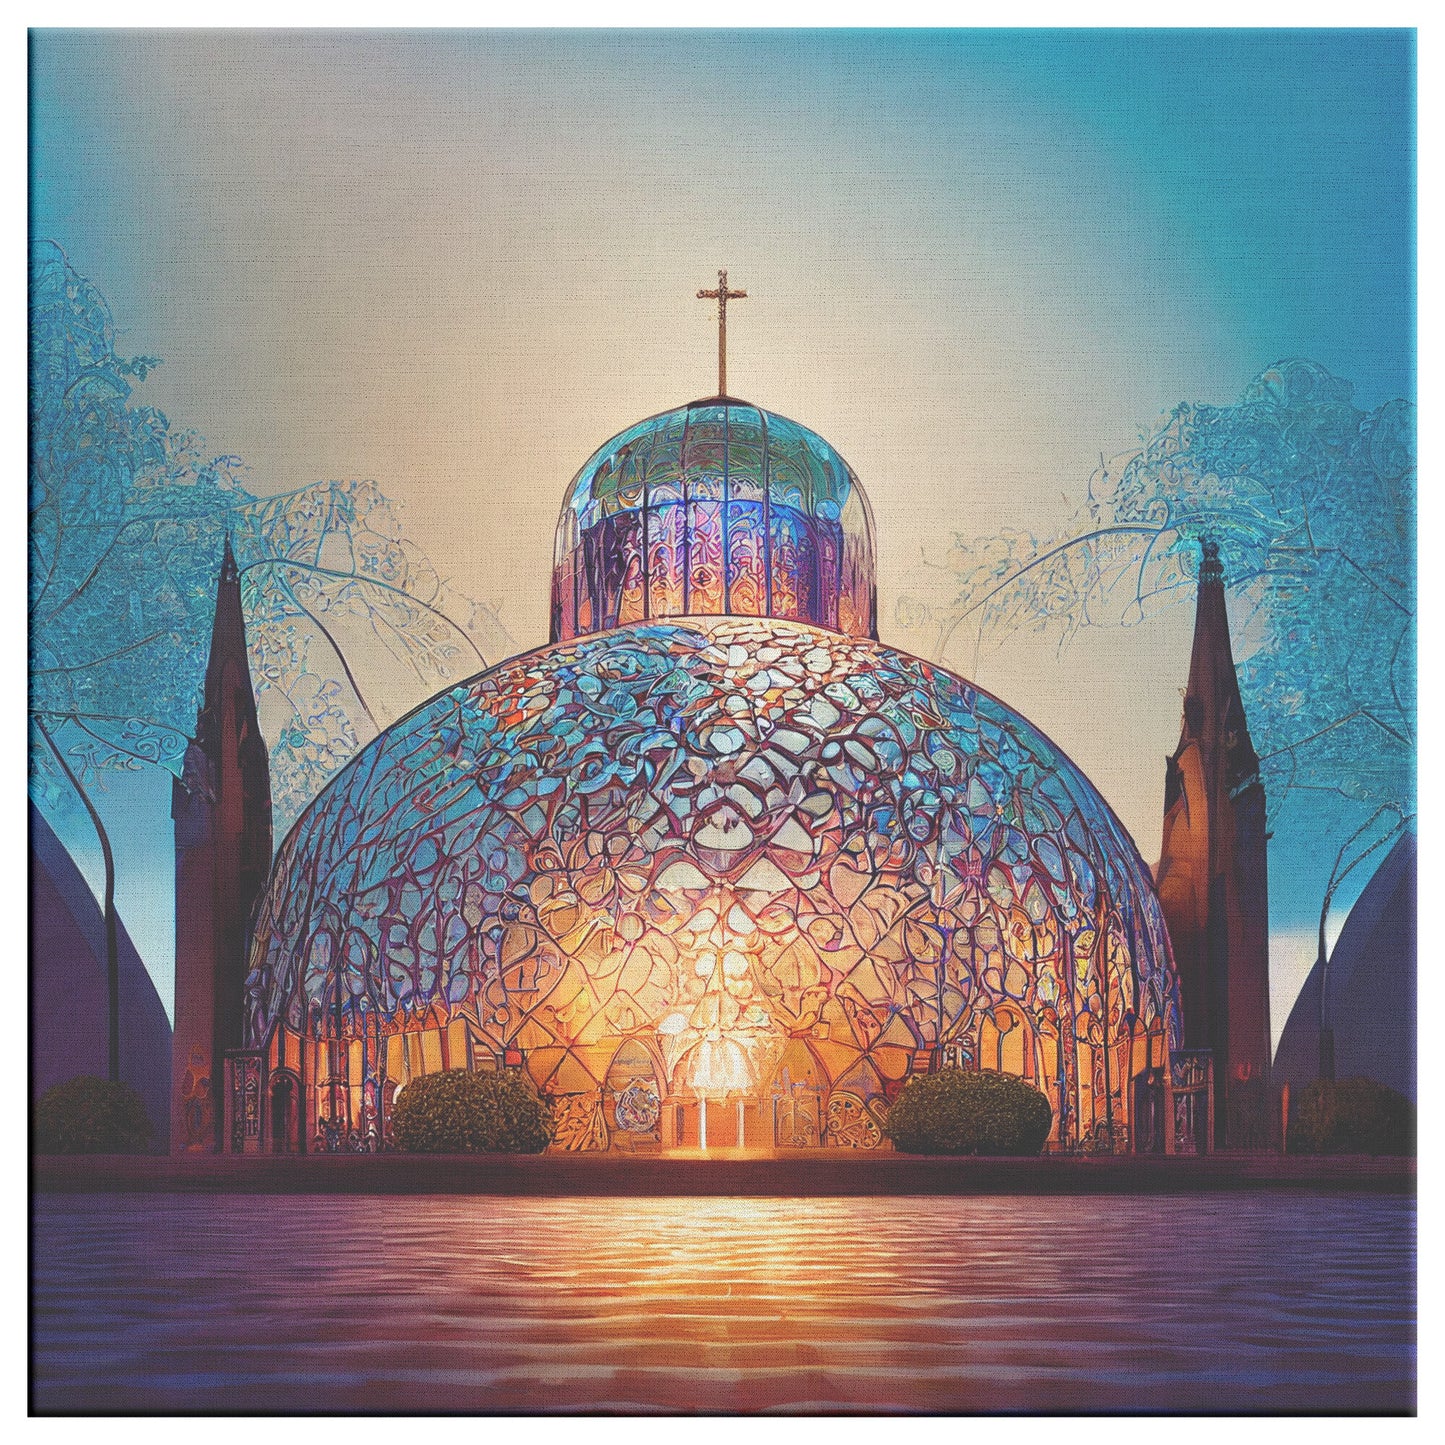 Sci Fi Architecture, Sci Fi Cathedral Concept Art, Midjourney AI Art